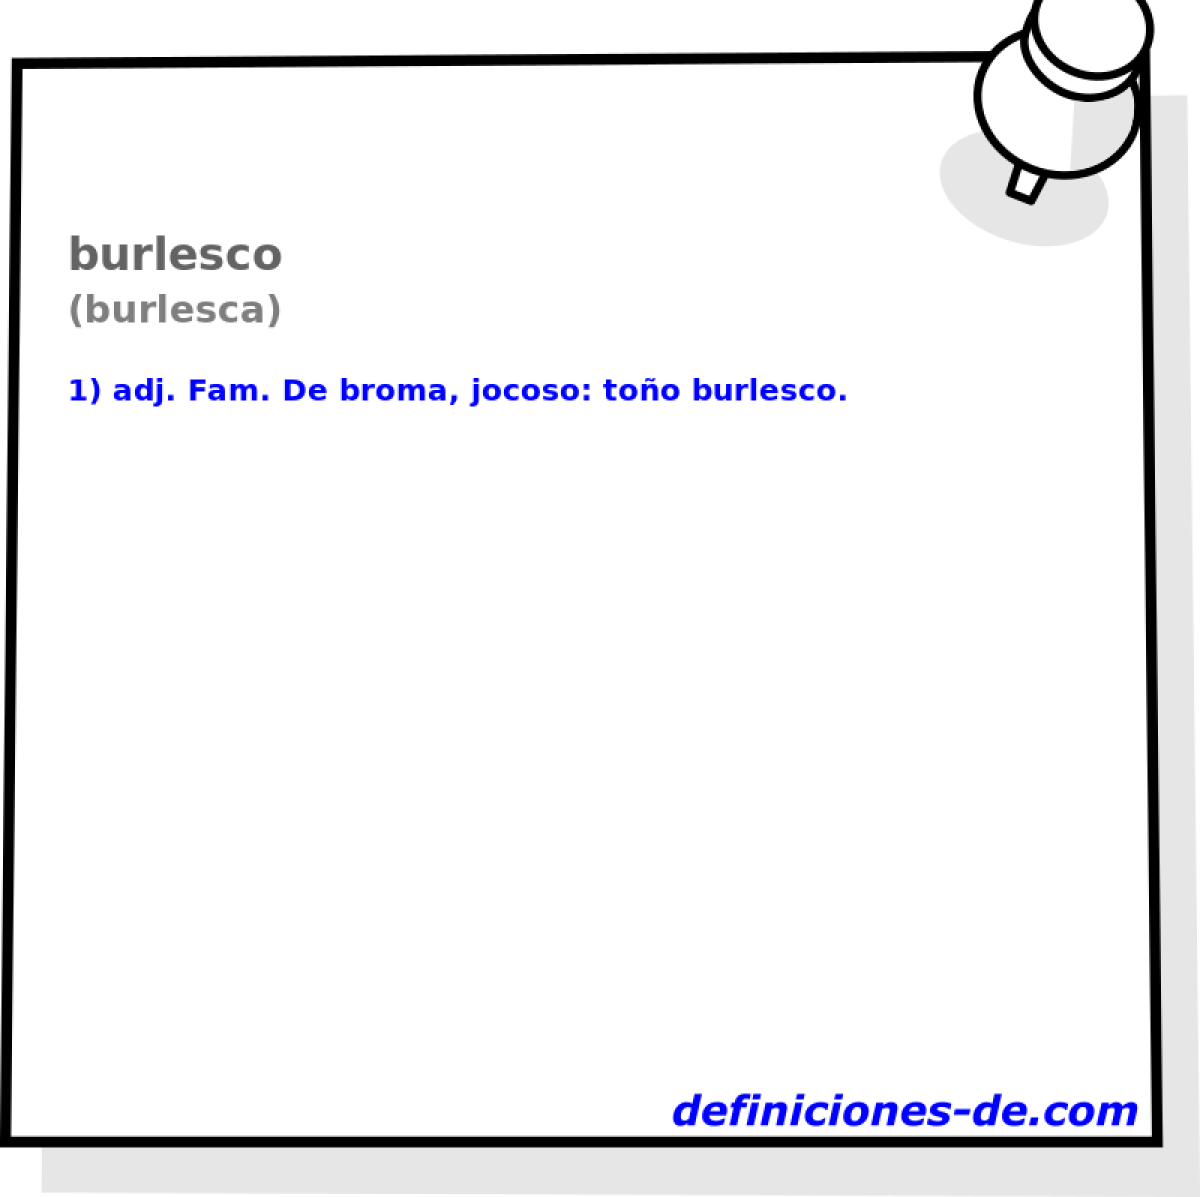 burlesco (burlesca)